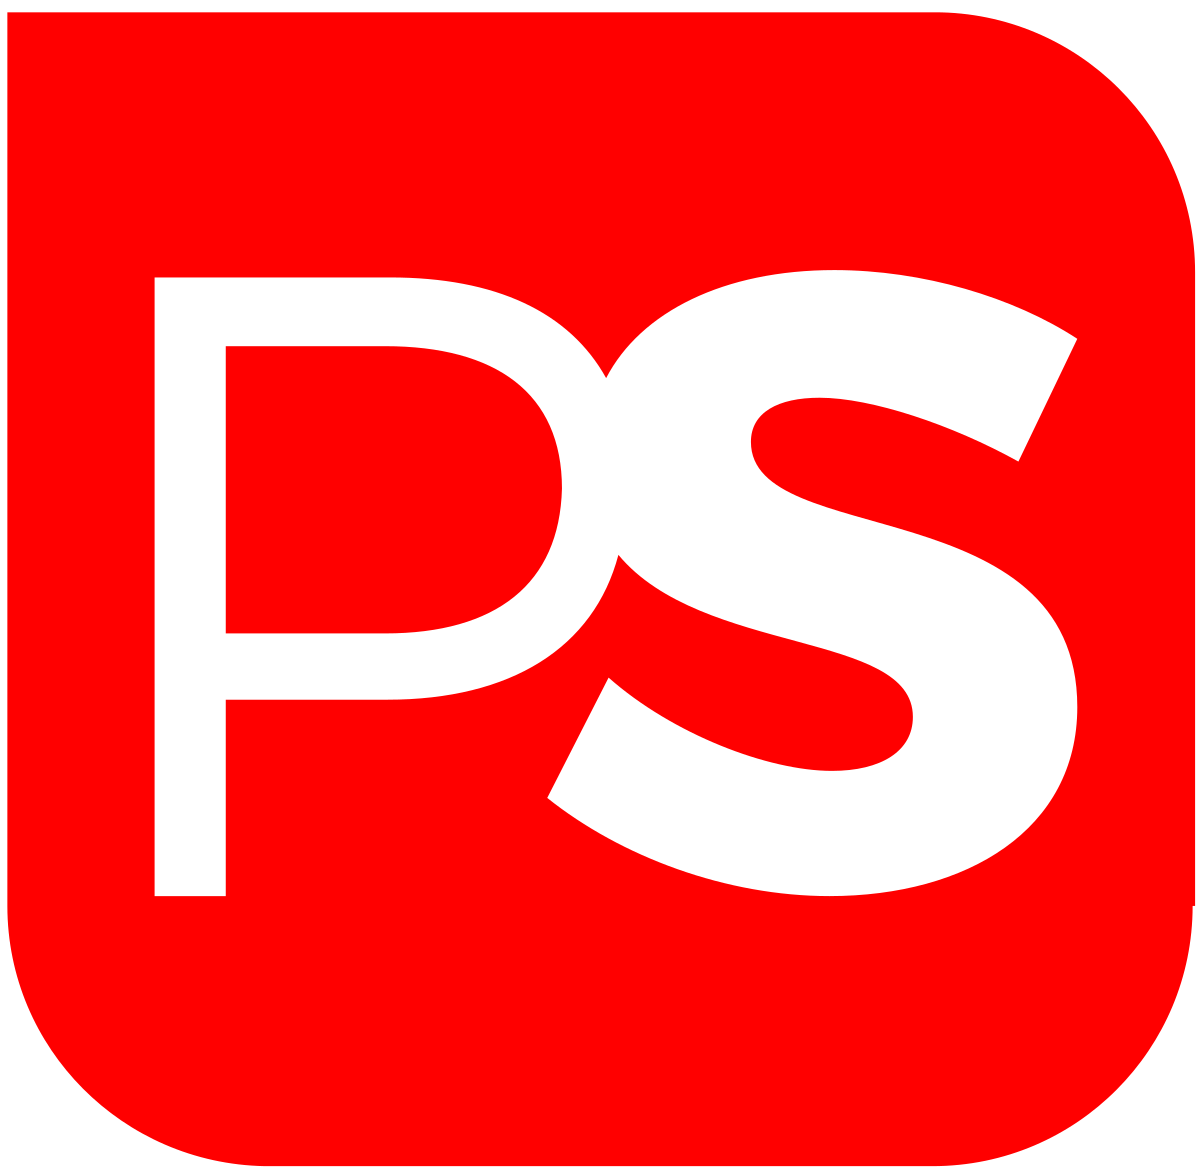 socialist party belgium logo svg